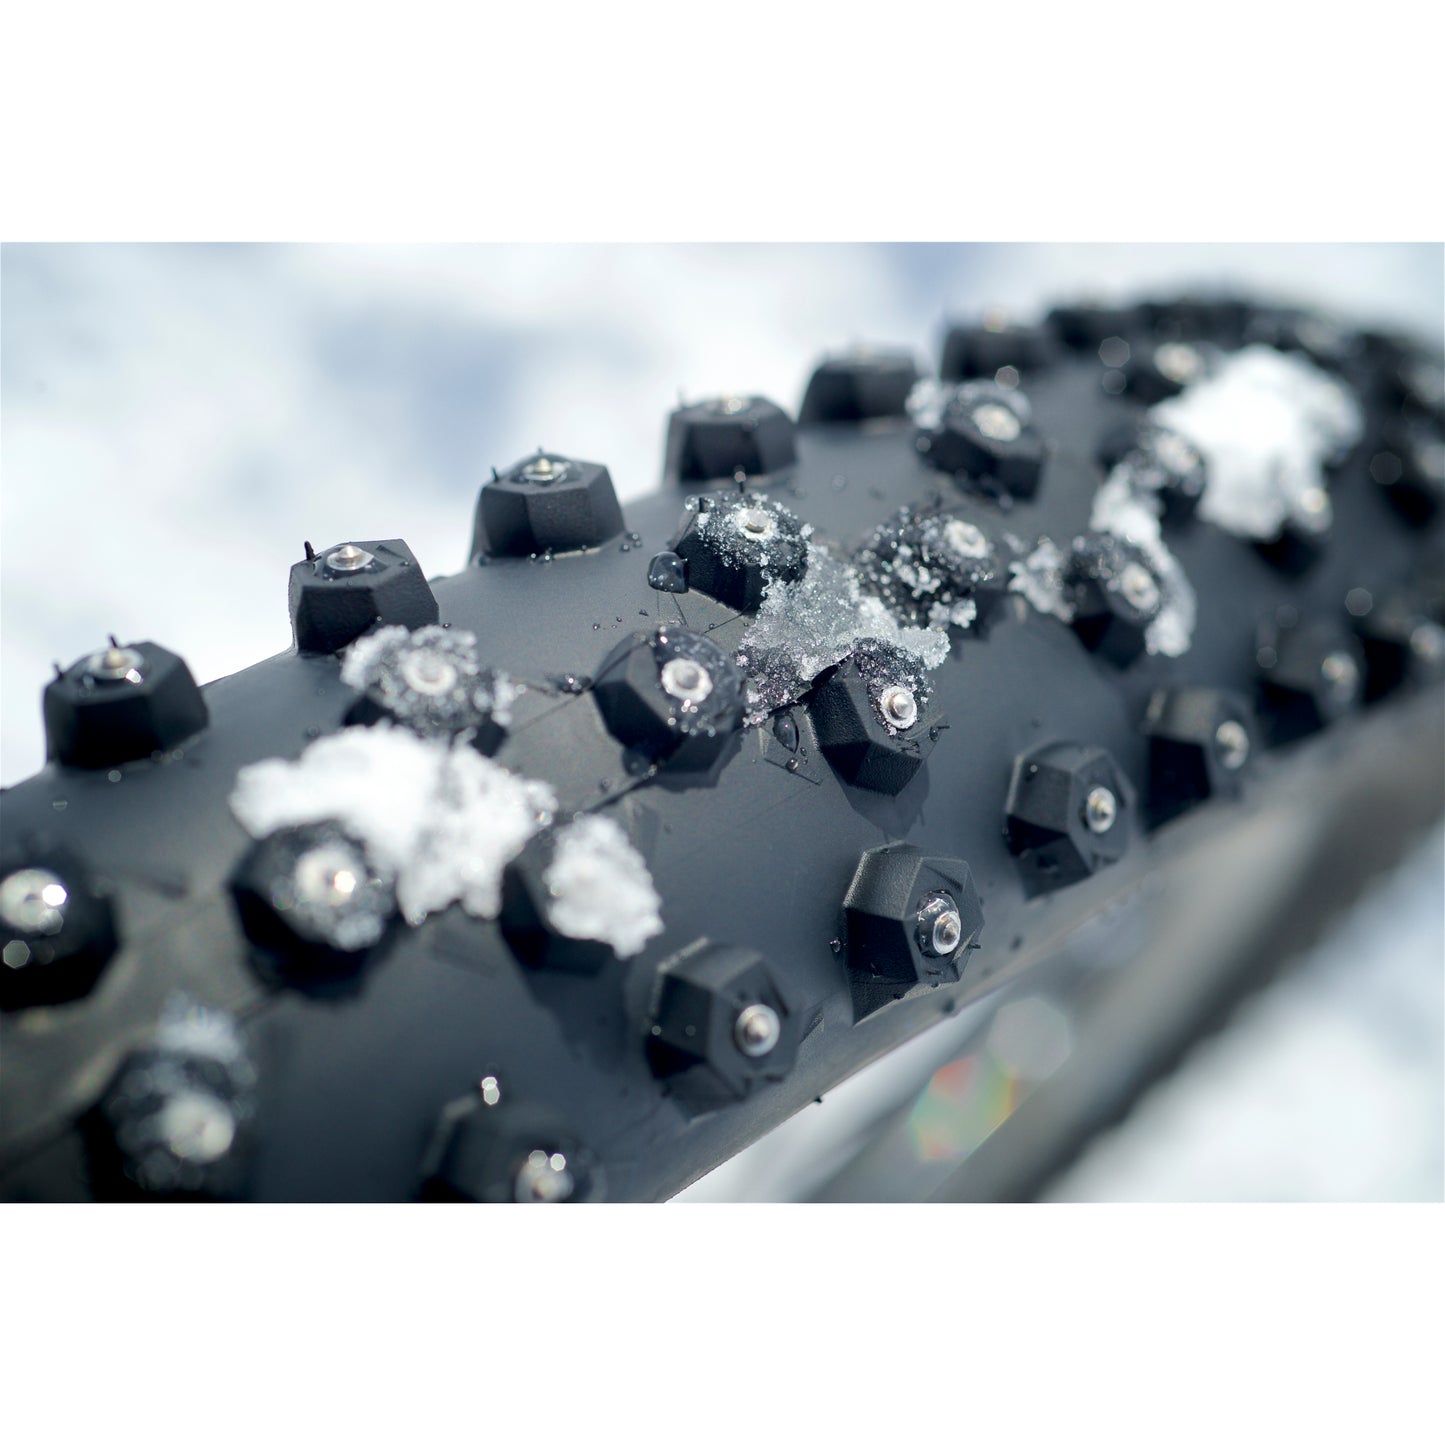 Schwalbe Ice Spiker Pro Wire Bead Tire - Performance | Winter | RaceGuard - 29x2.60" | Black